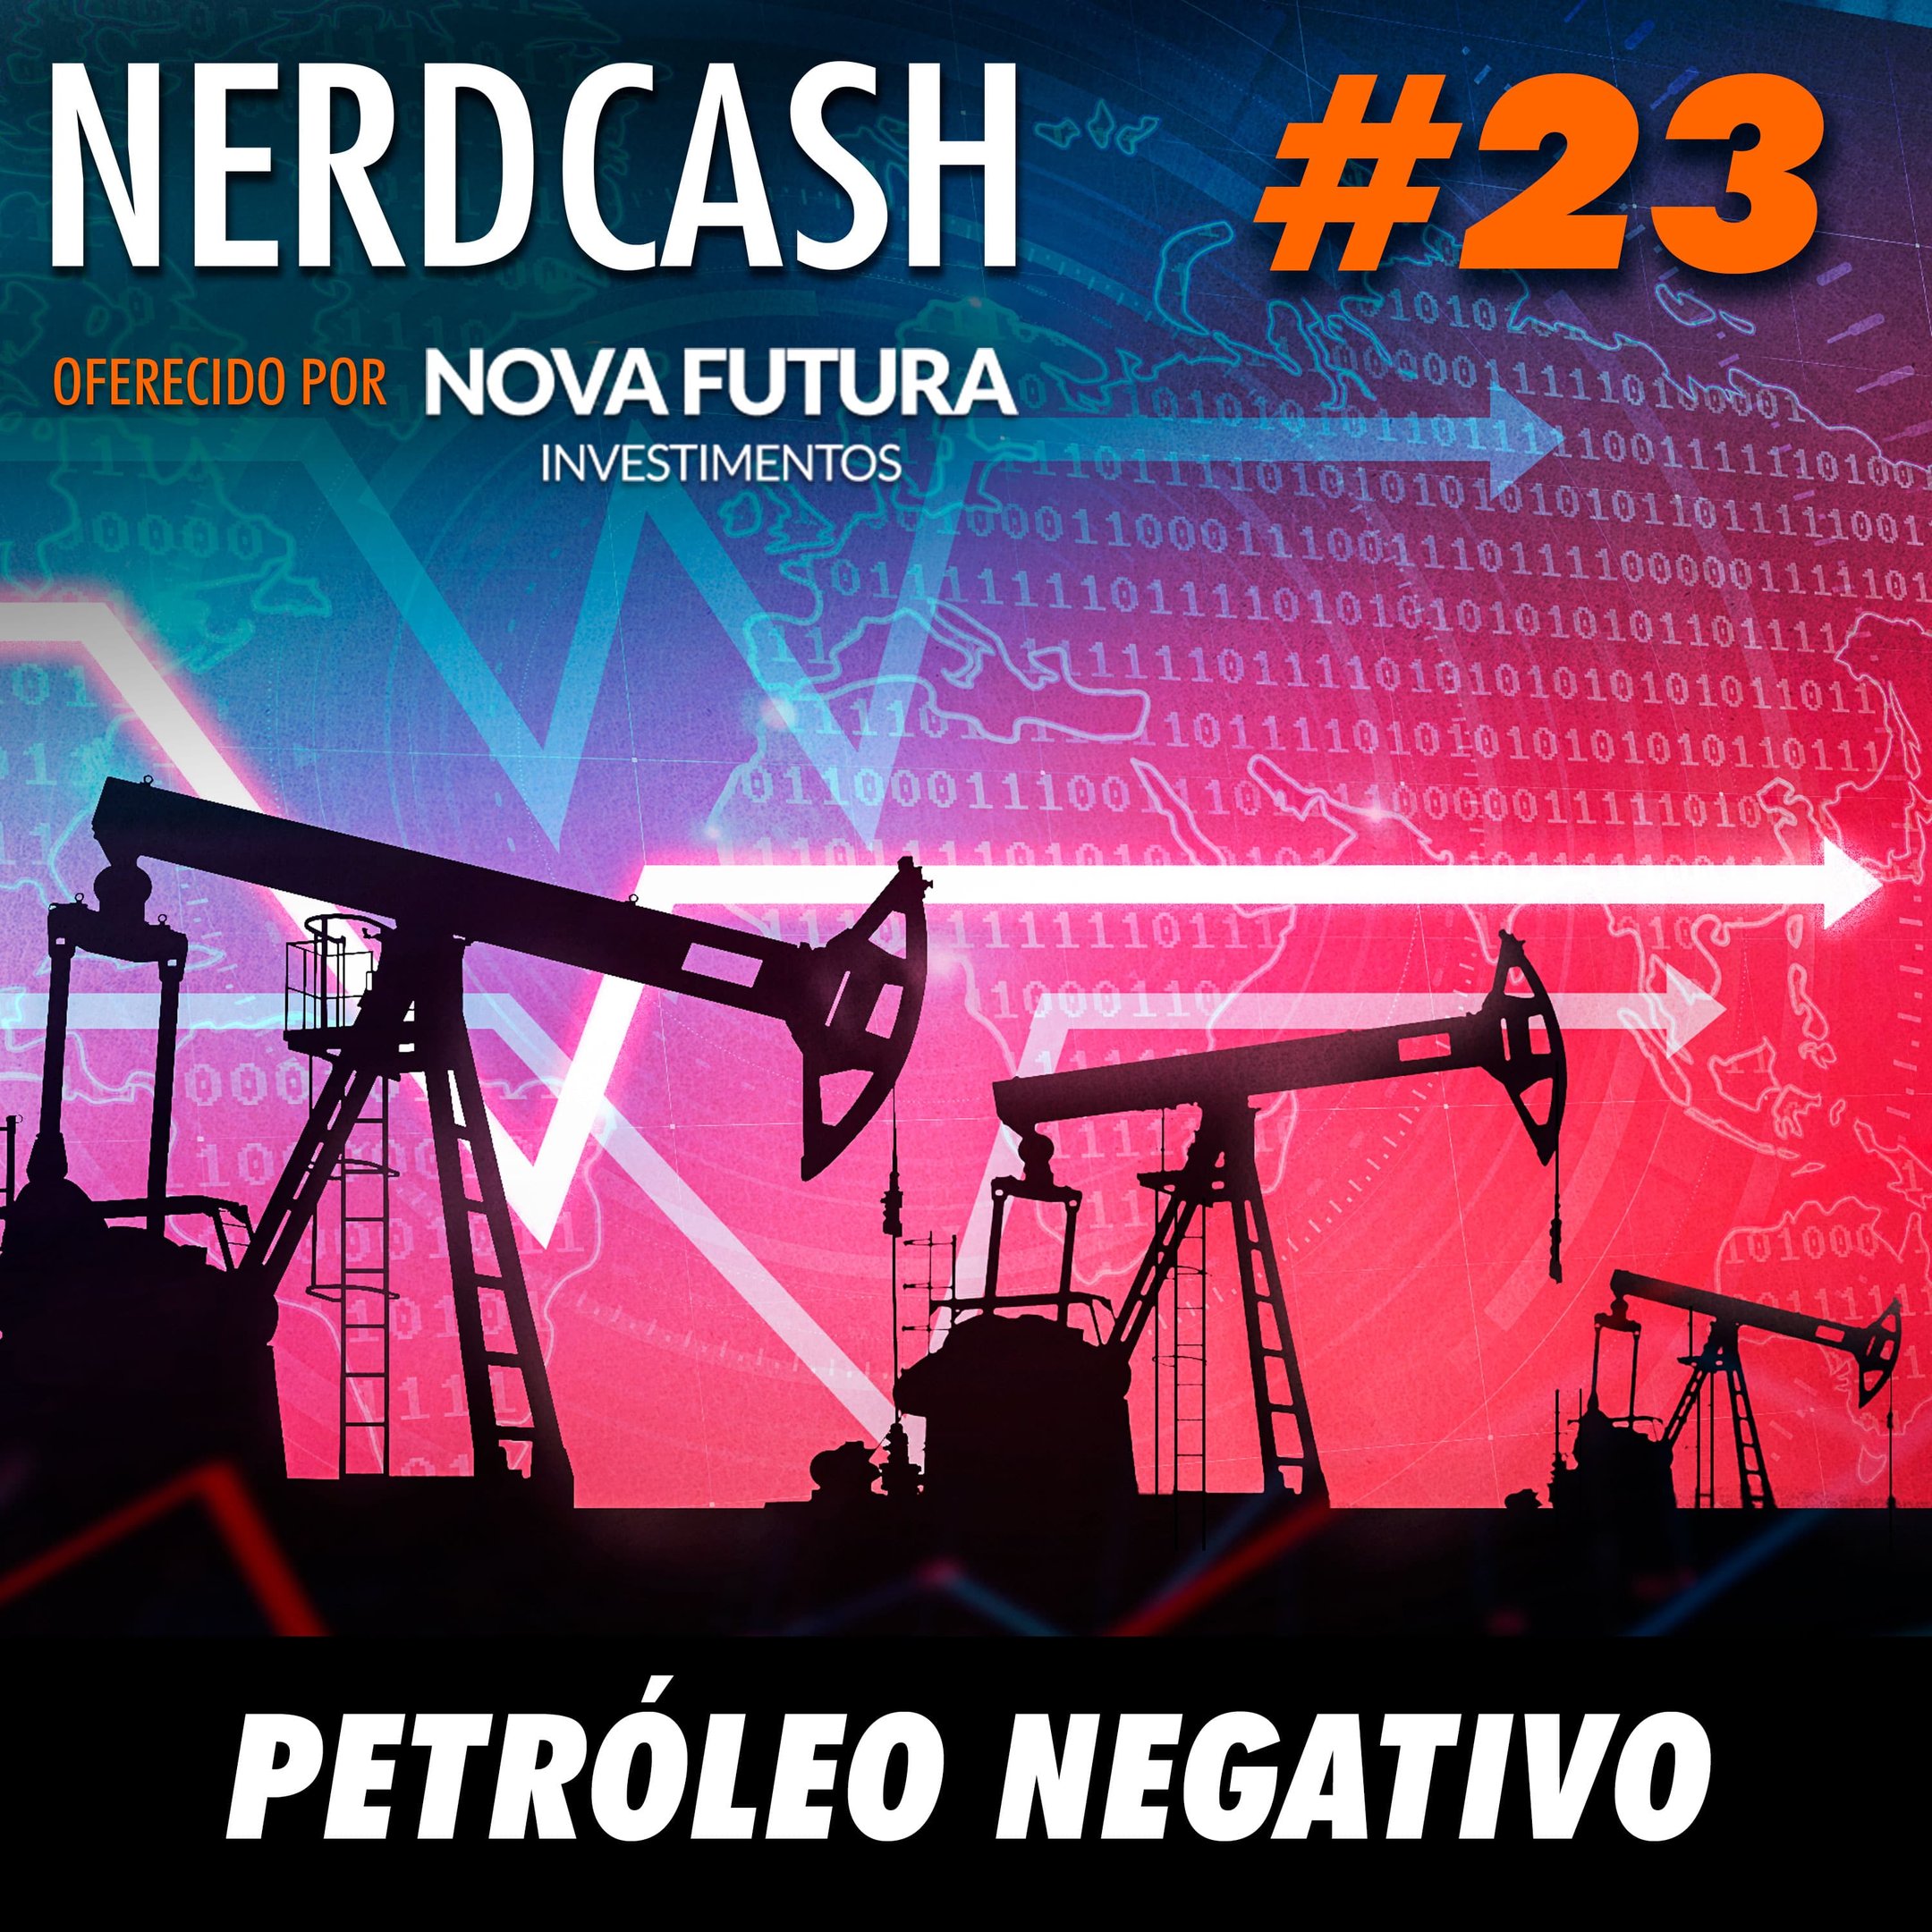 NerdCash 23 - Petróleo negativo